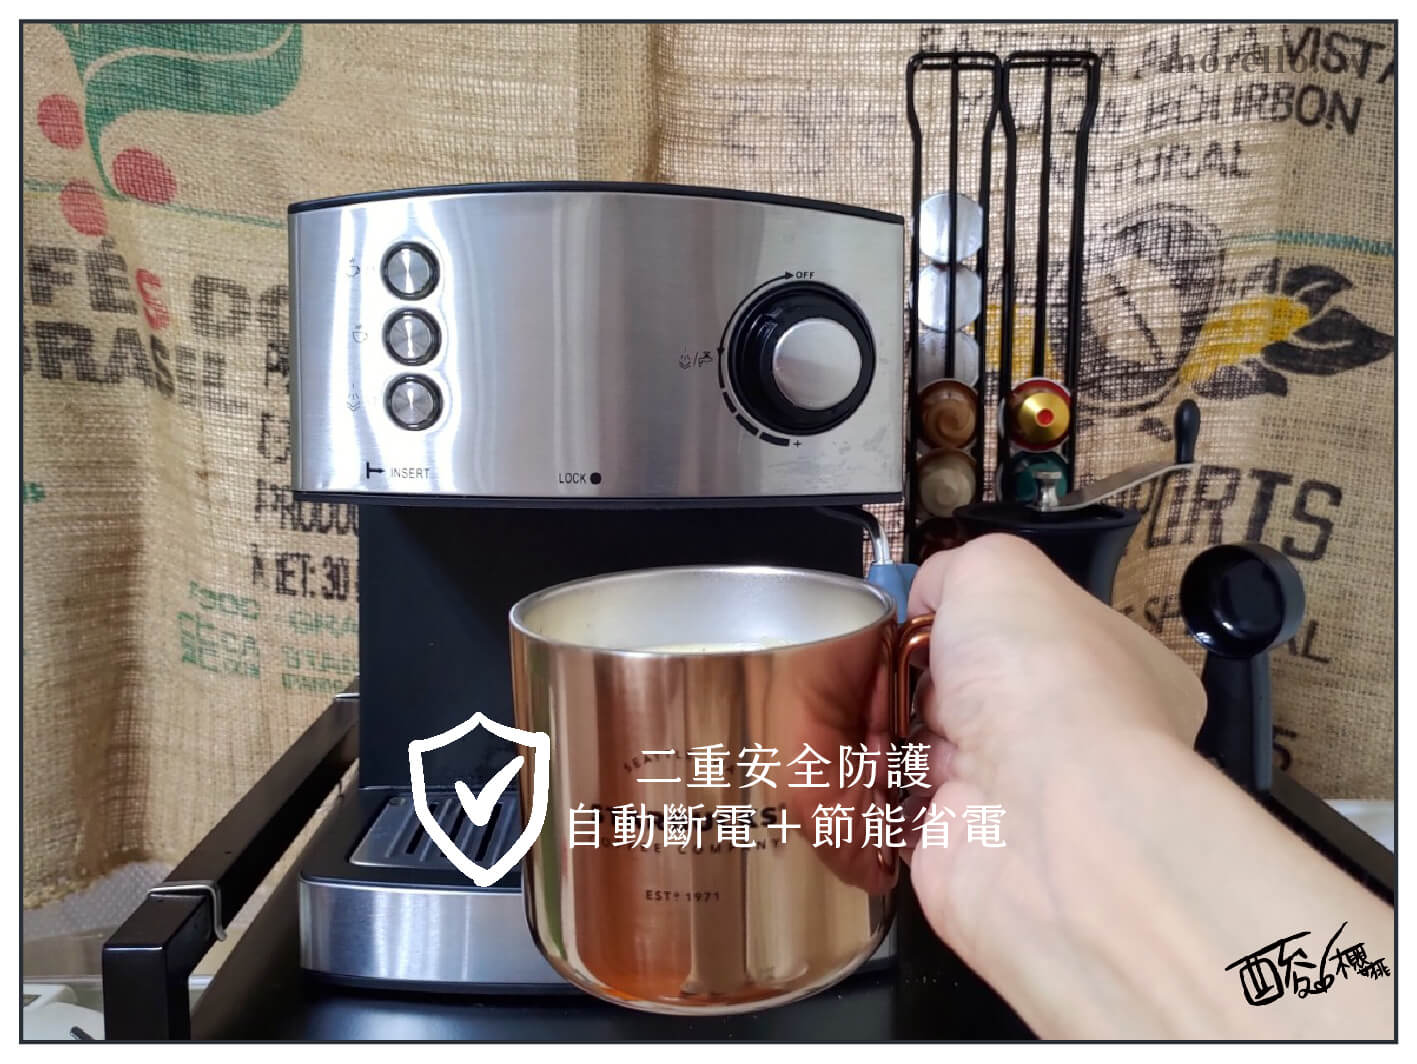 YIRGA CLASSIC 半自動義式咖啡機 二重安全防護